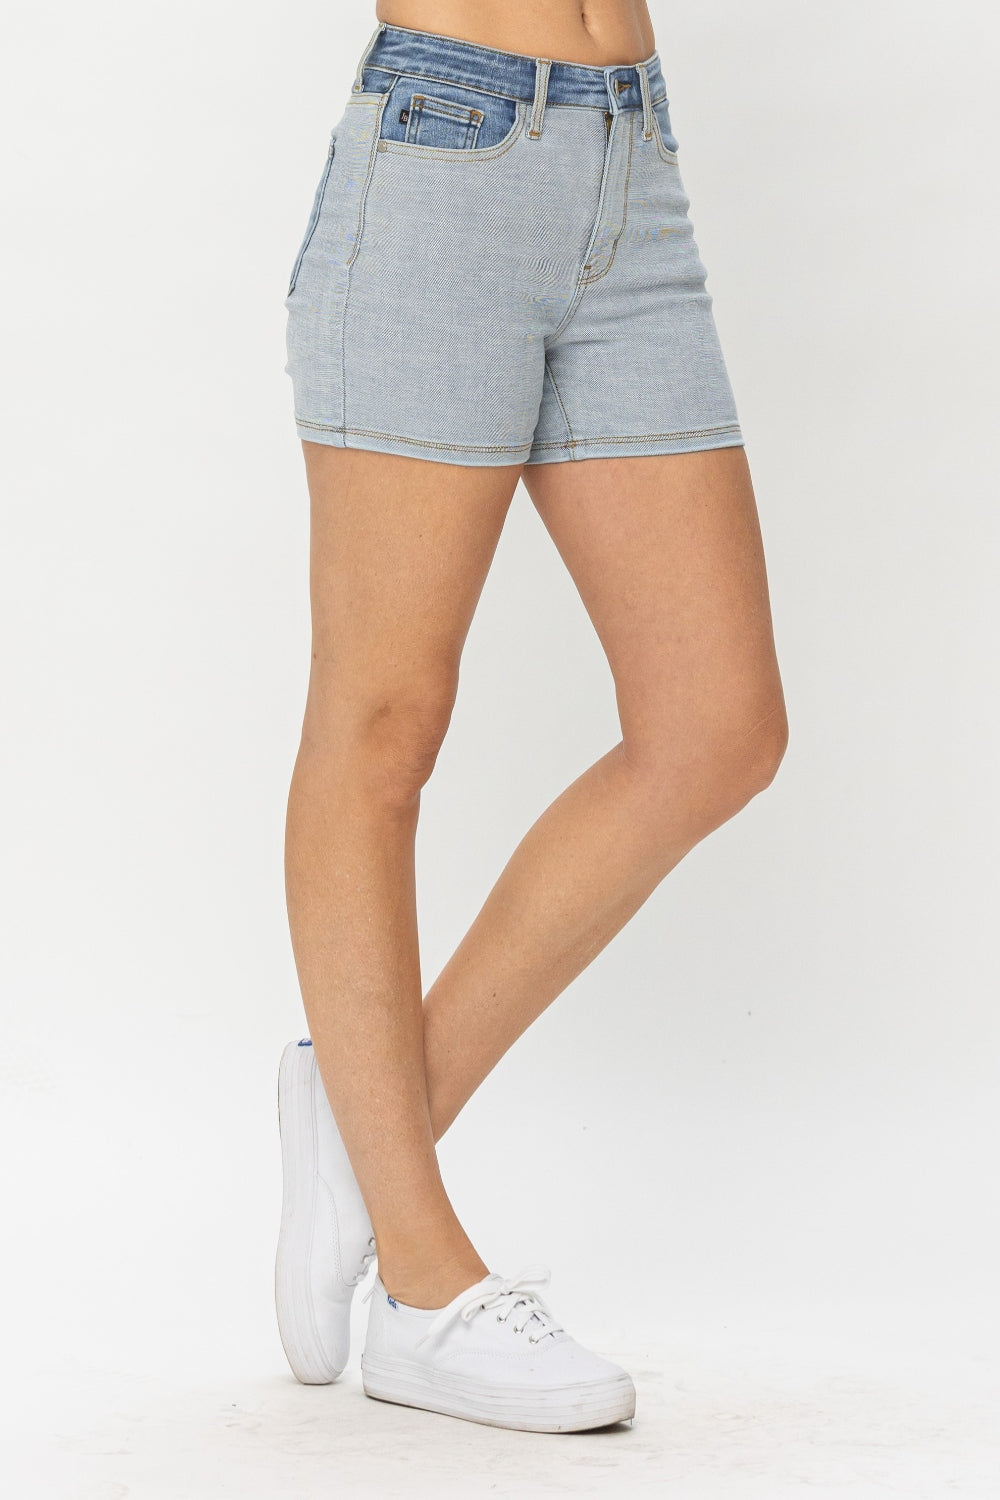 Judy Blue Full Size Color Block Denim Shorts - Scarlett's Riverside Boutique